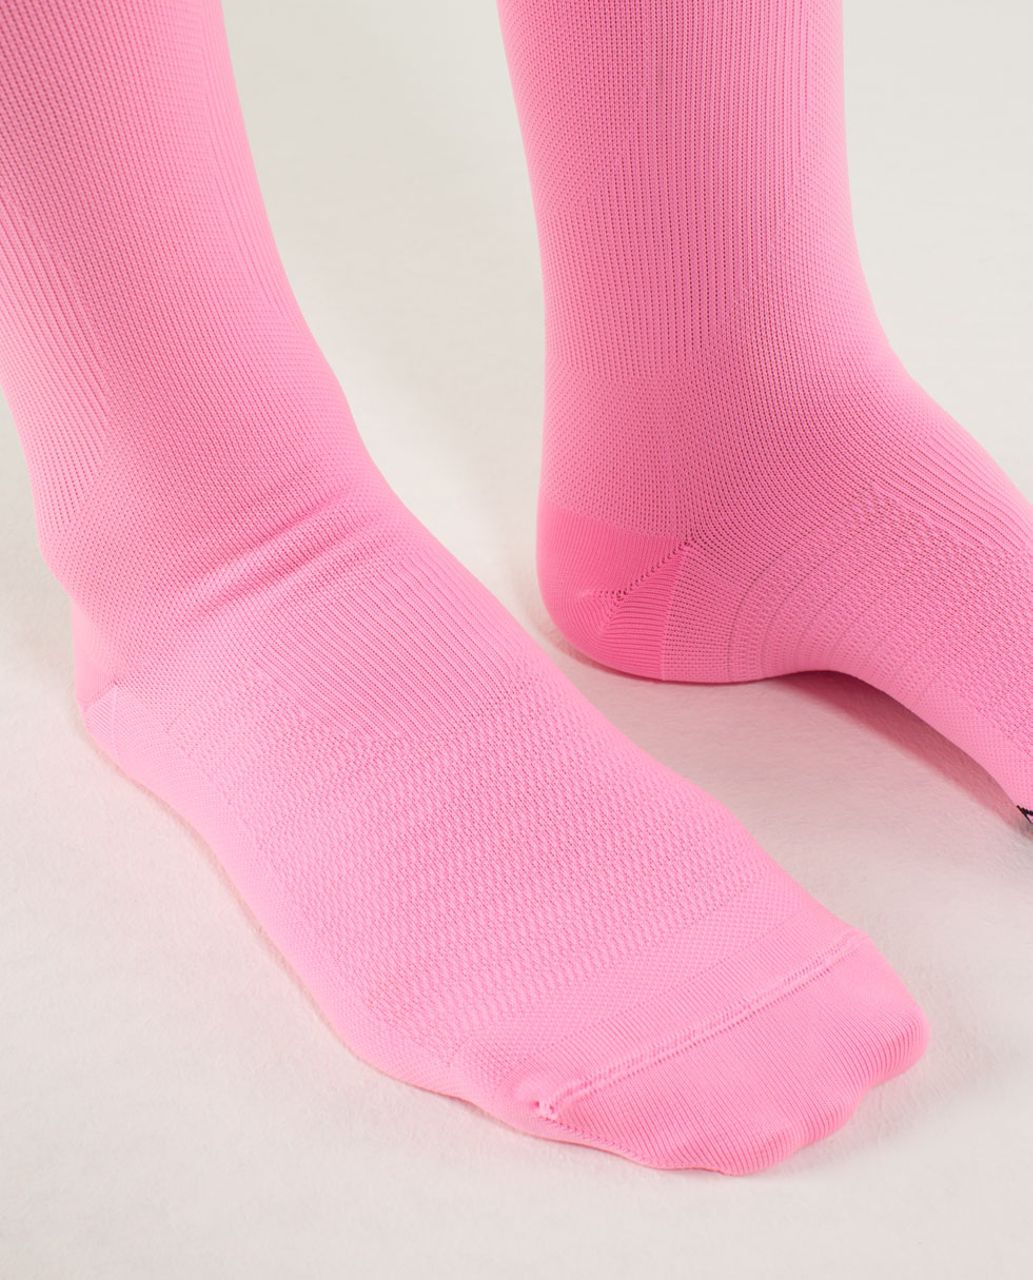 Lululemon Women's Compression Sock - Pretty Pink